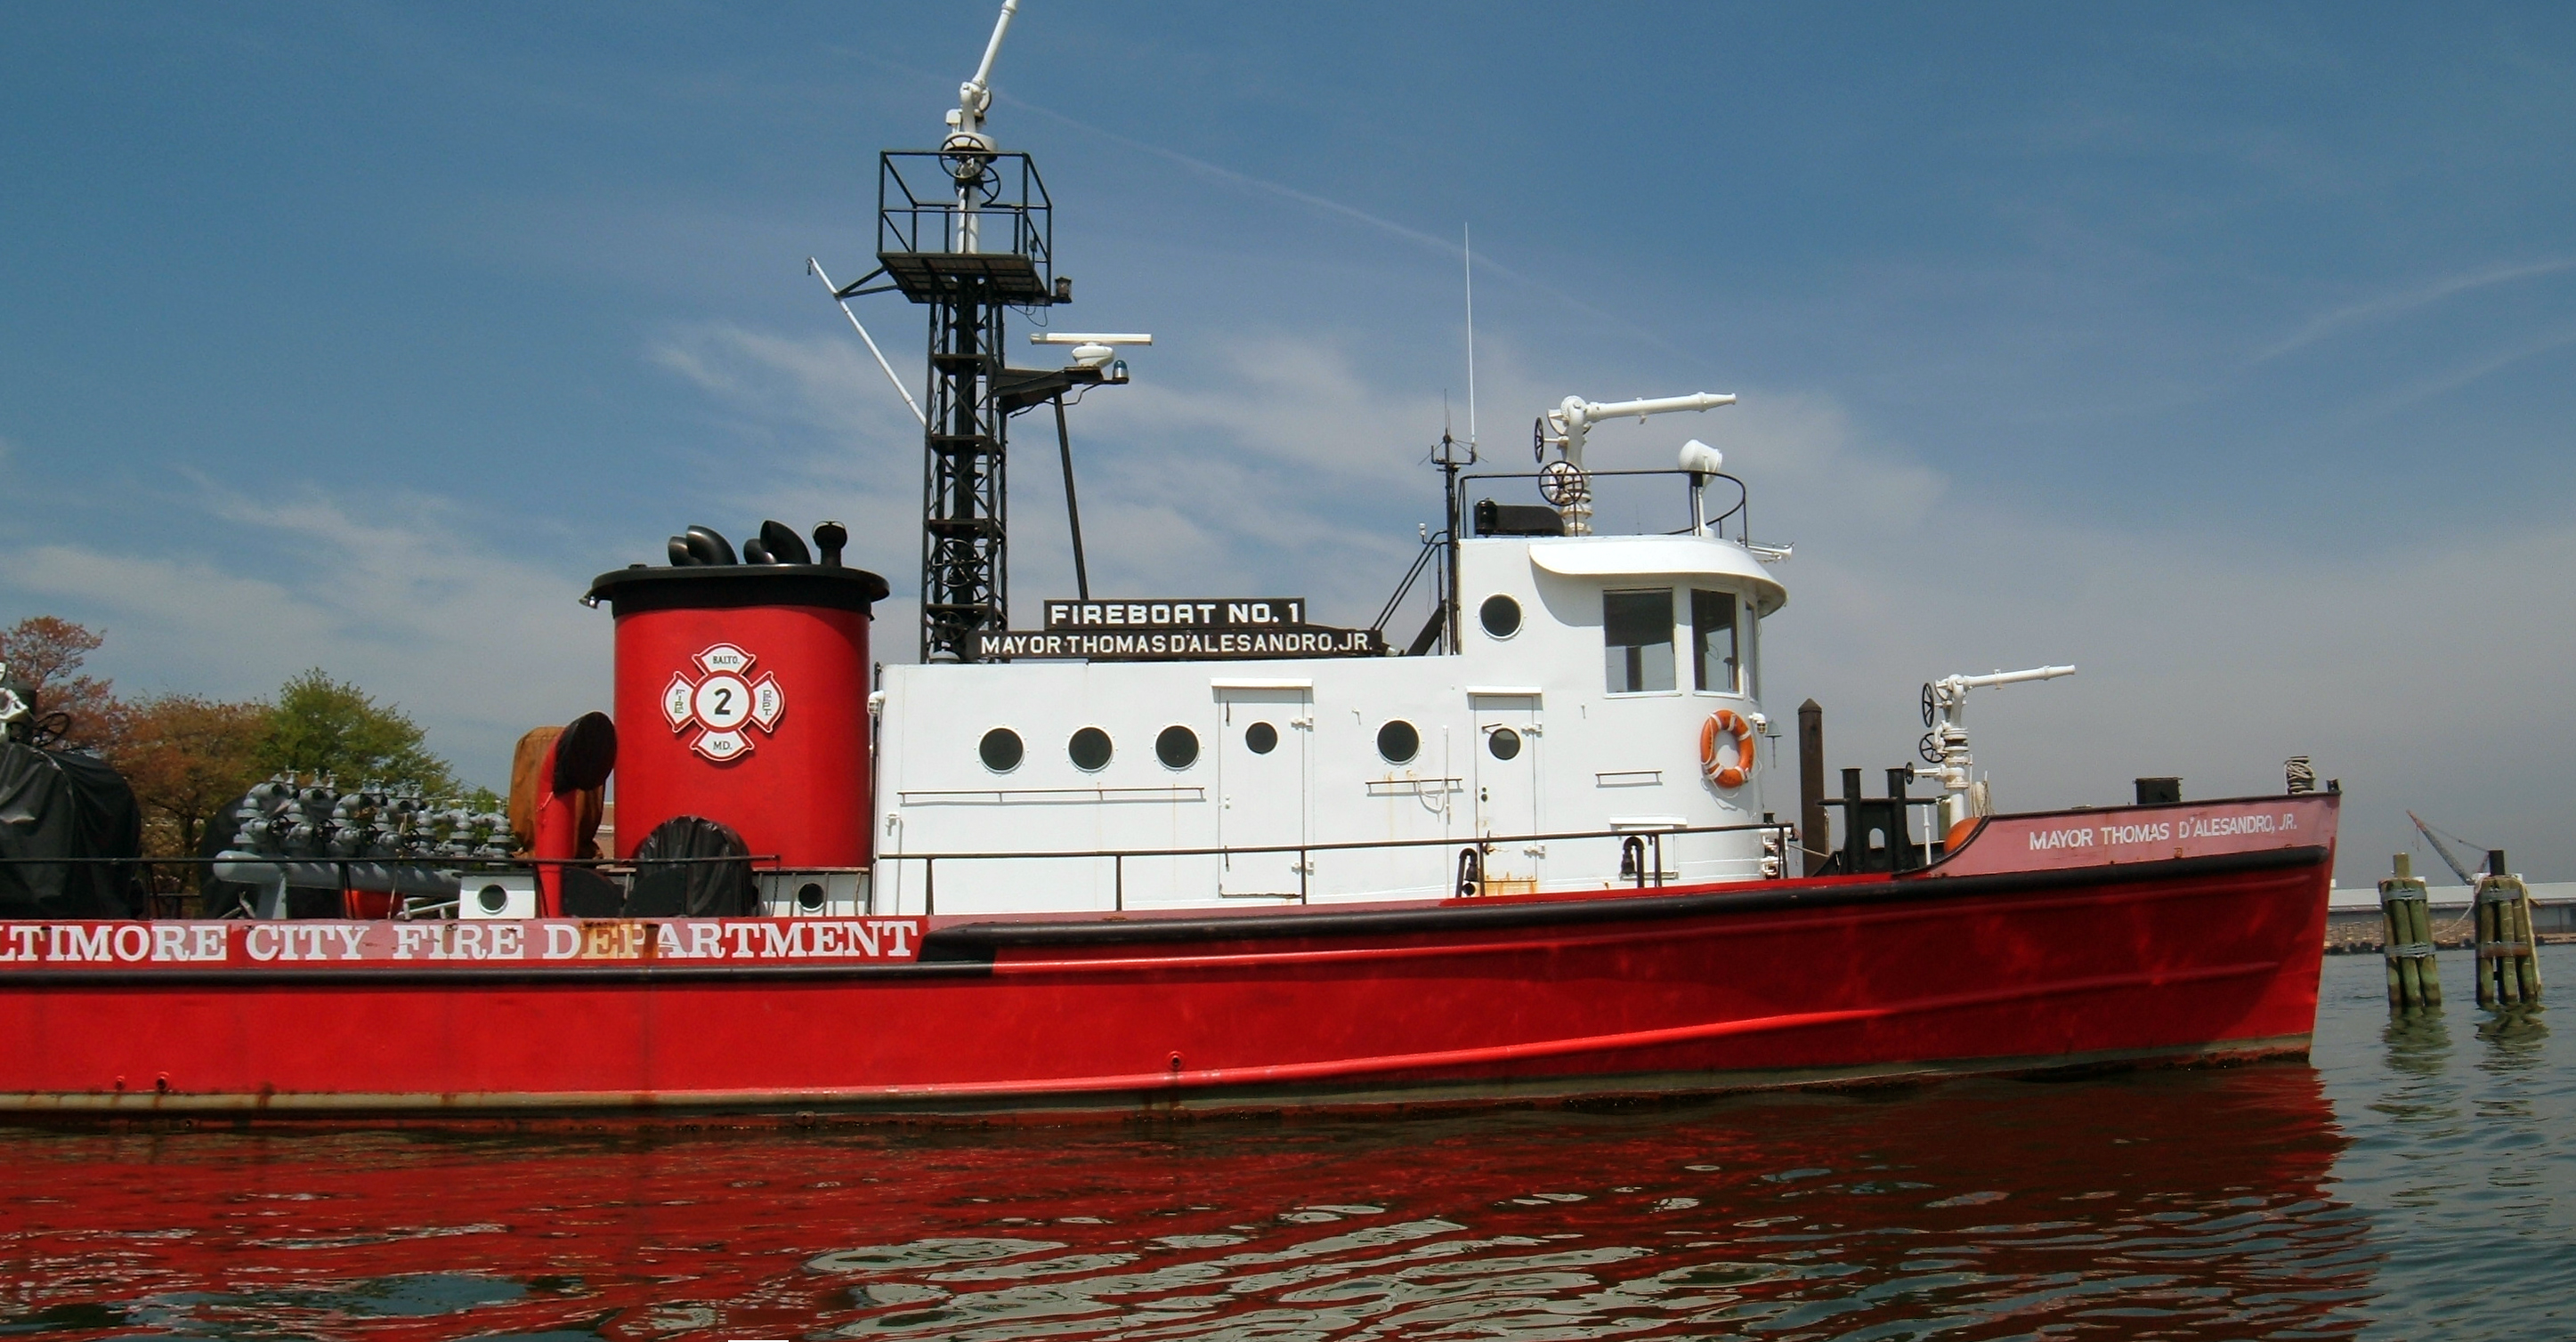 Baltimore fireboat -a